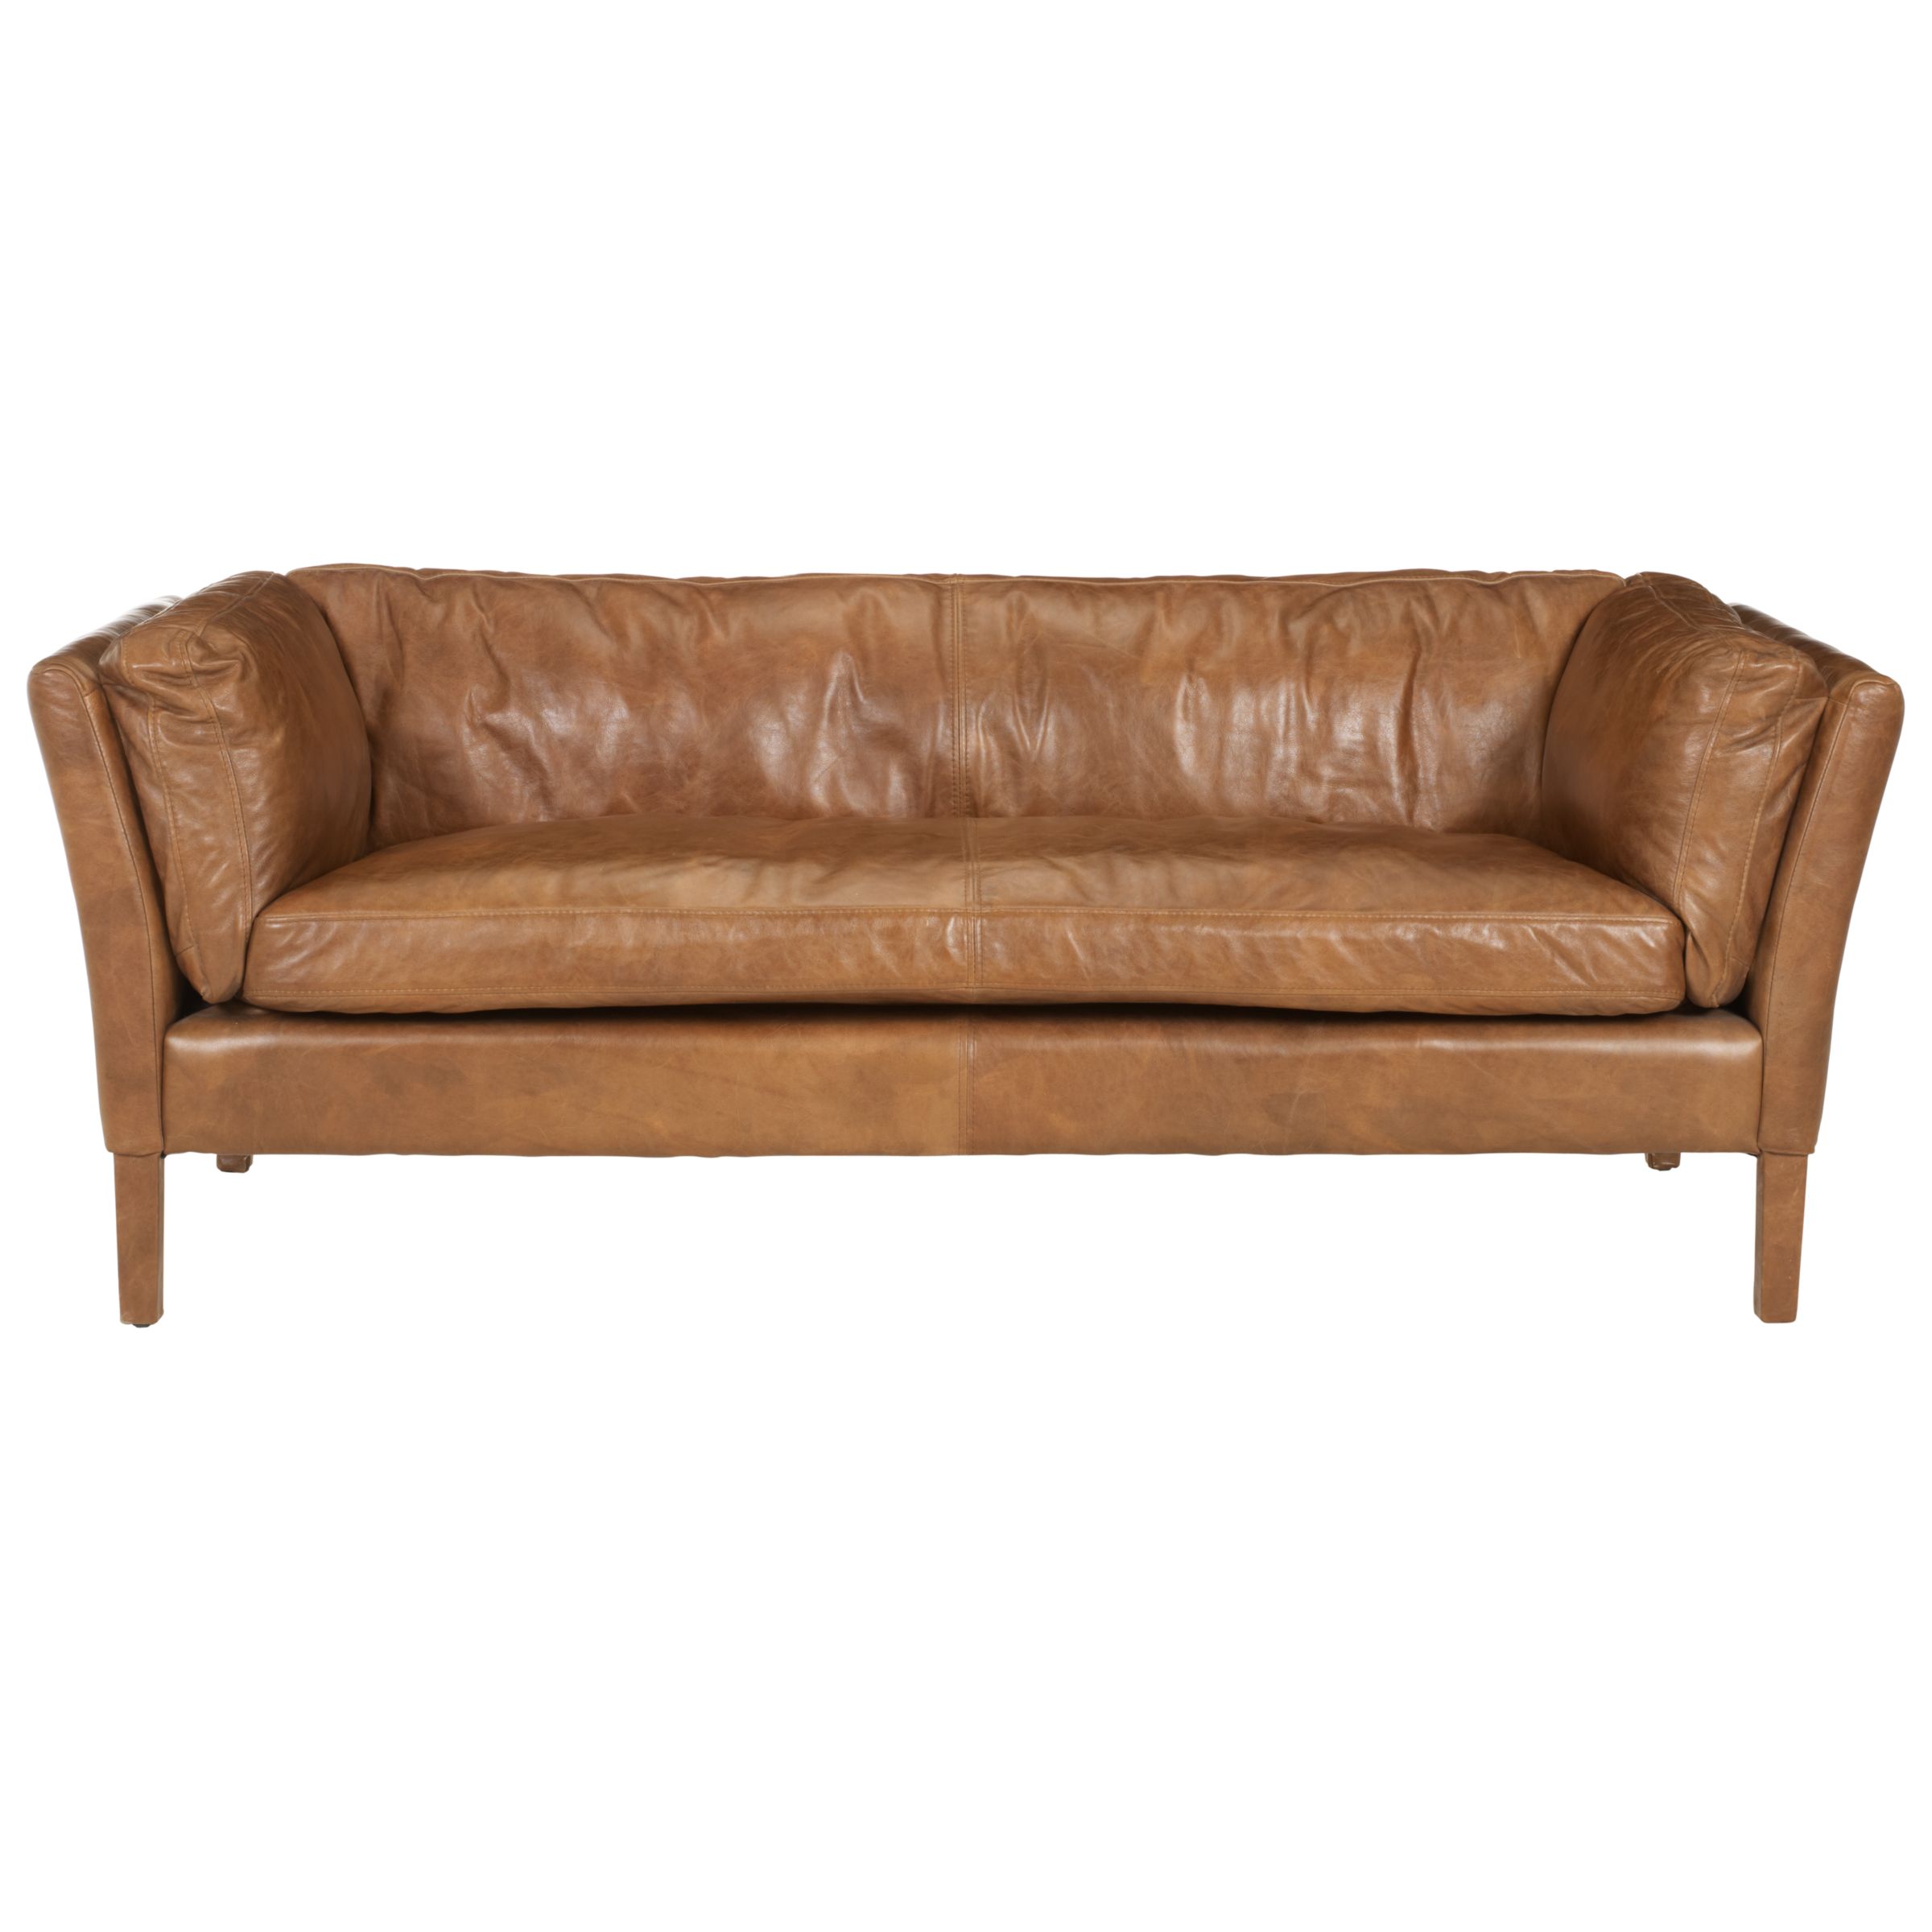 John Lewis Groucho Large Leather Sofa, Walnut at John Lewis